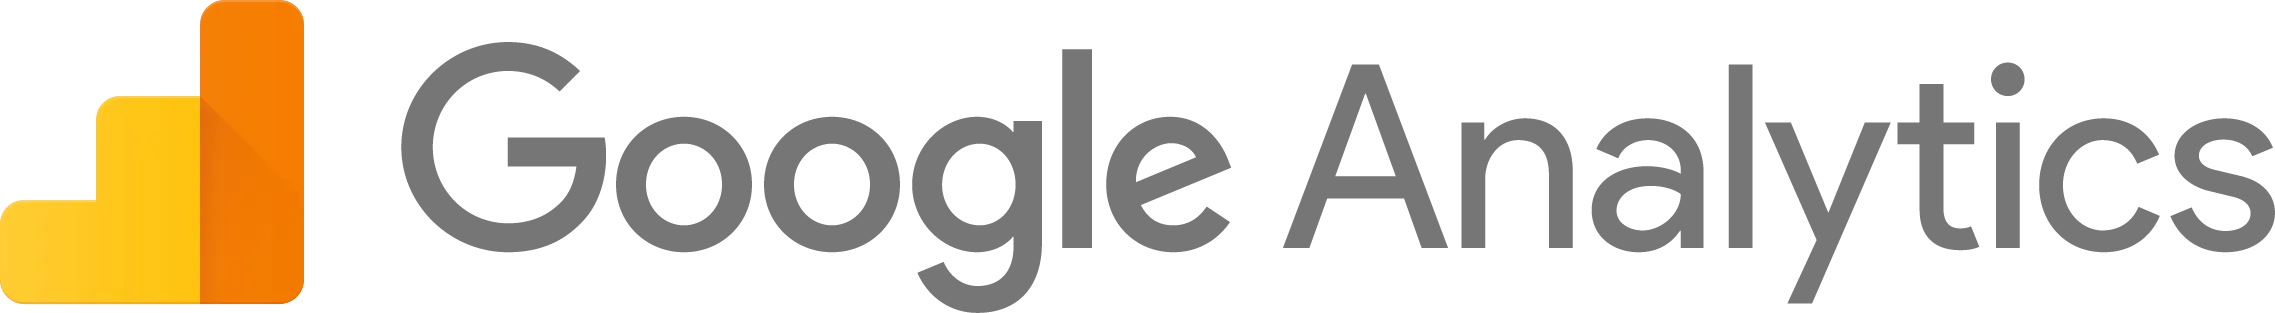 google-analytics-logo